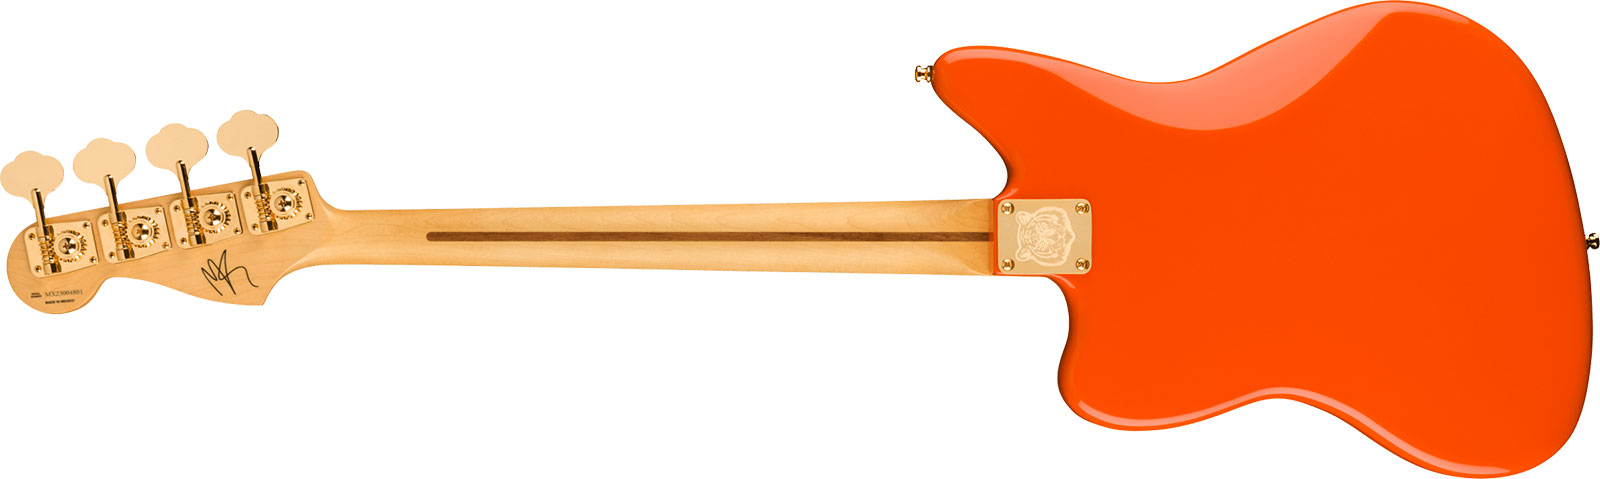 Fender Mike Kerr Jaguar Ltd Mex Signature Rw - Tiger's Blood Orange - Solid body electric bass - Variation 1